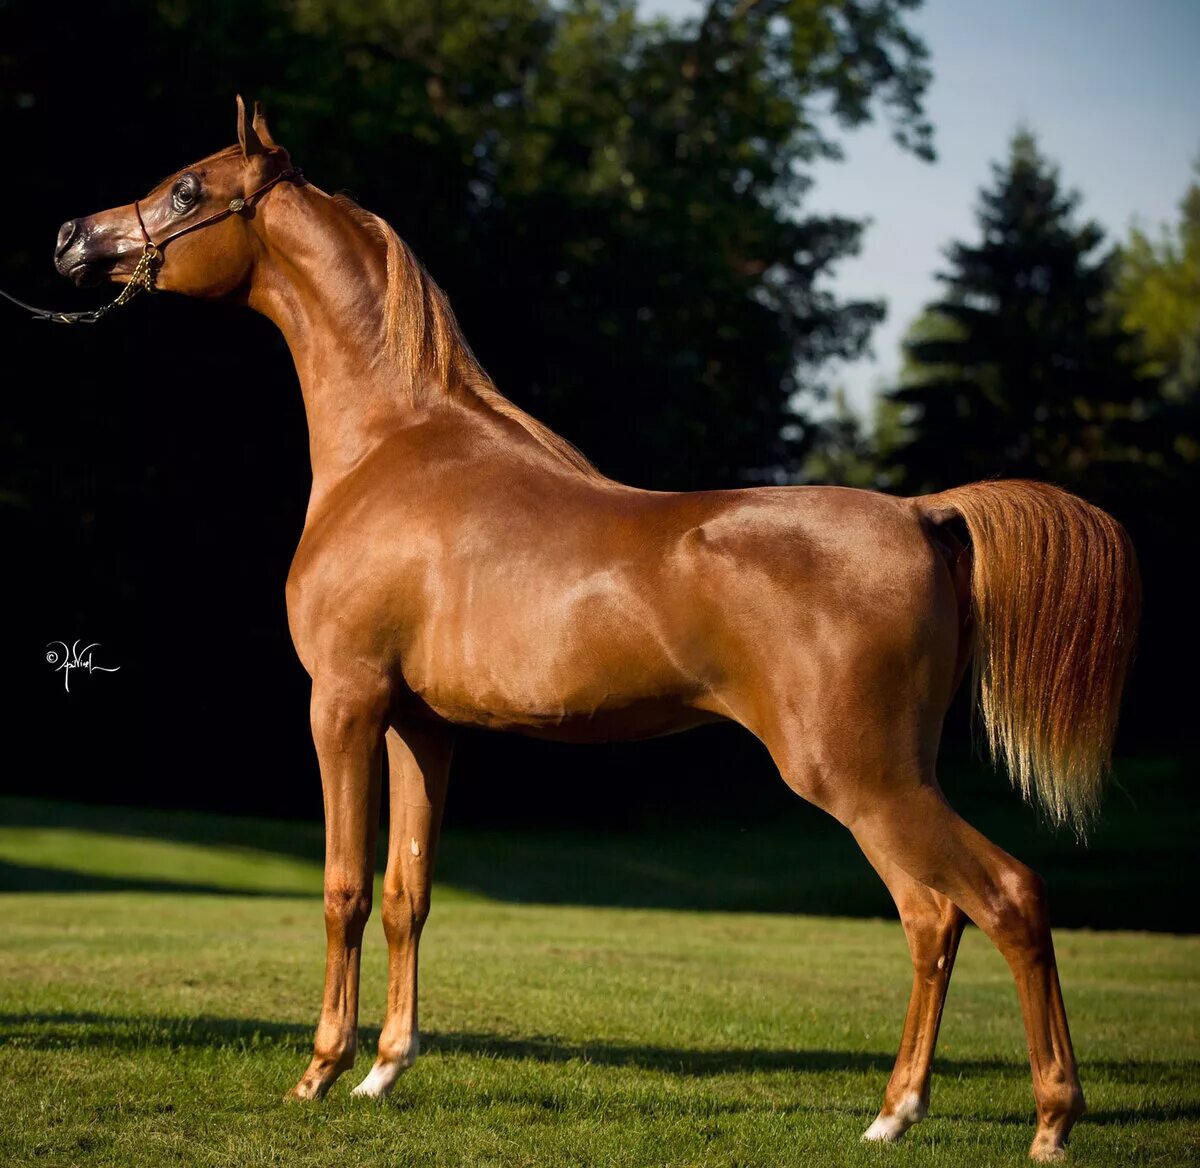 Арабская лошадь 5. Арабская лошадь (арабский скакун). Кохейлан арабская лошадь. Лошади породы арабская чистокровная. Арабская лошадь кохейлан-сиглави.